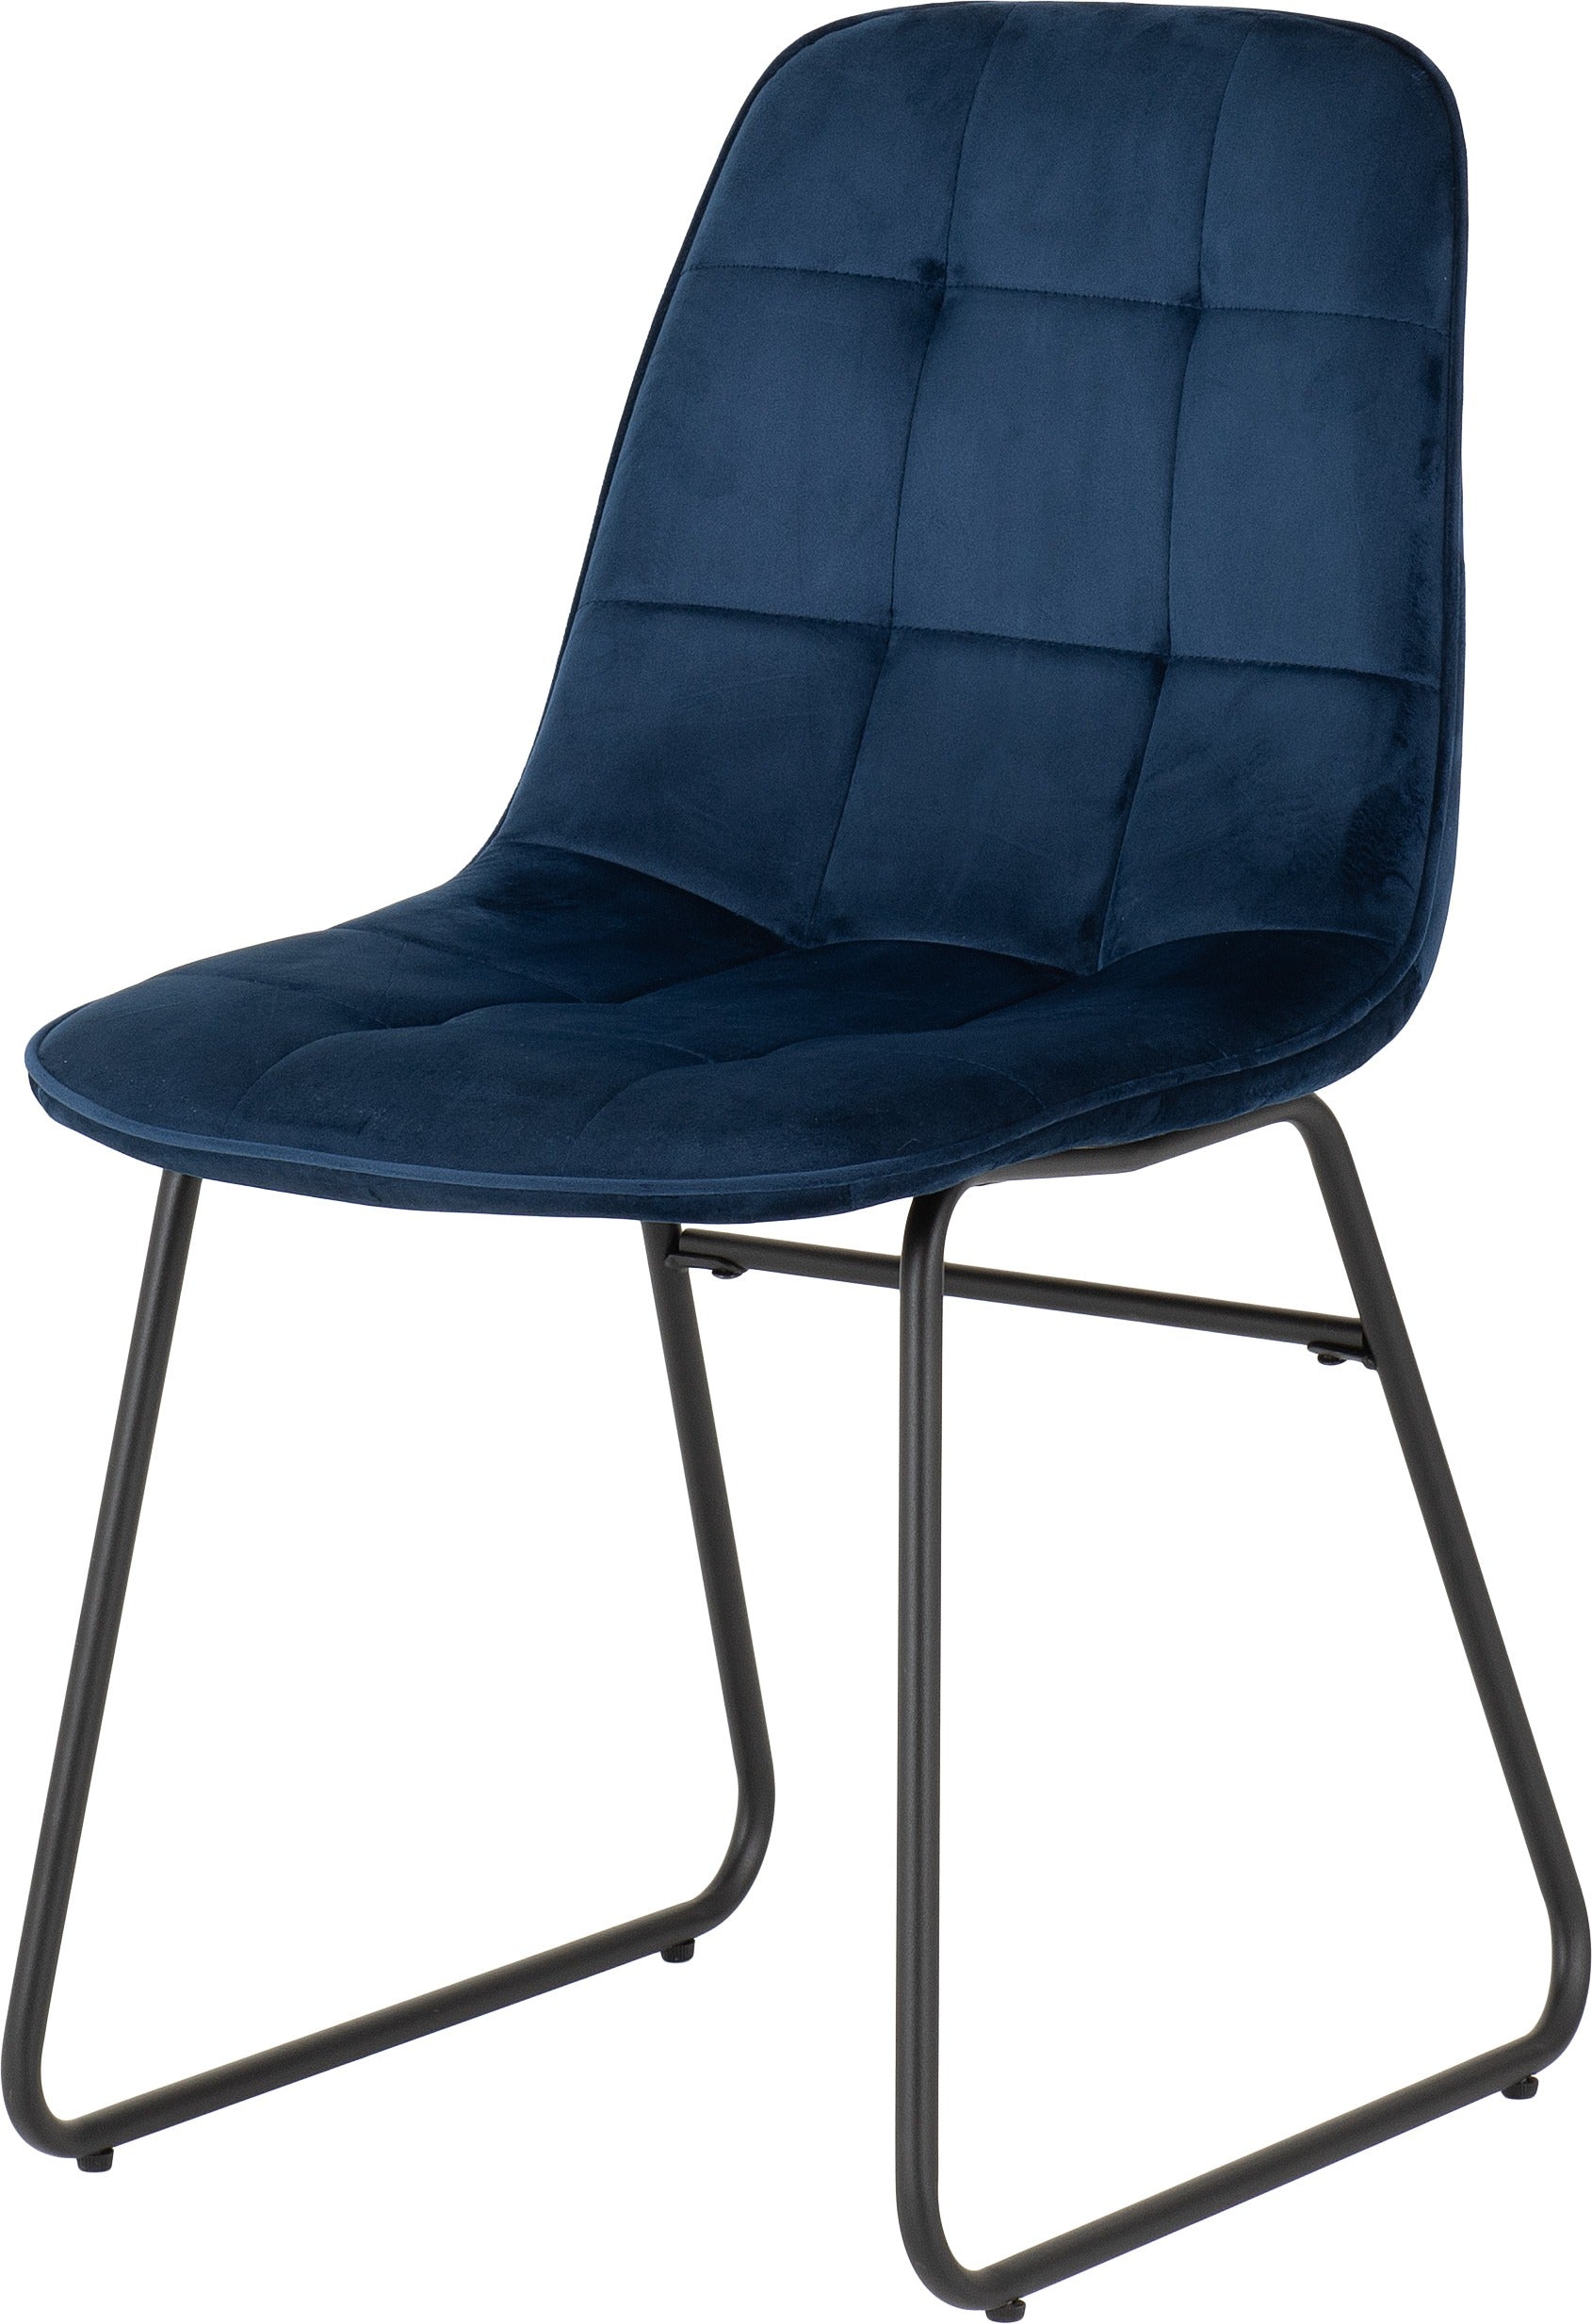 Berlin Dining Set with Lukas Chairs - Black Wood Grain/Sapphire Blue Velvet